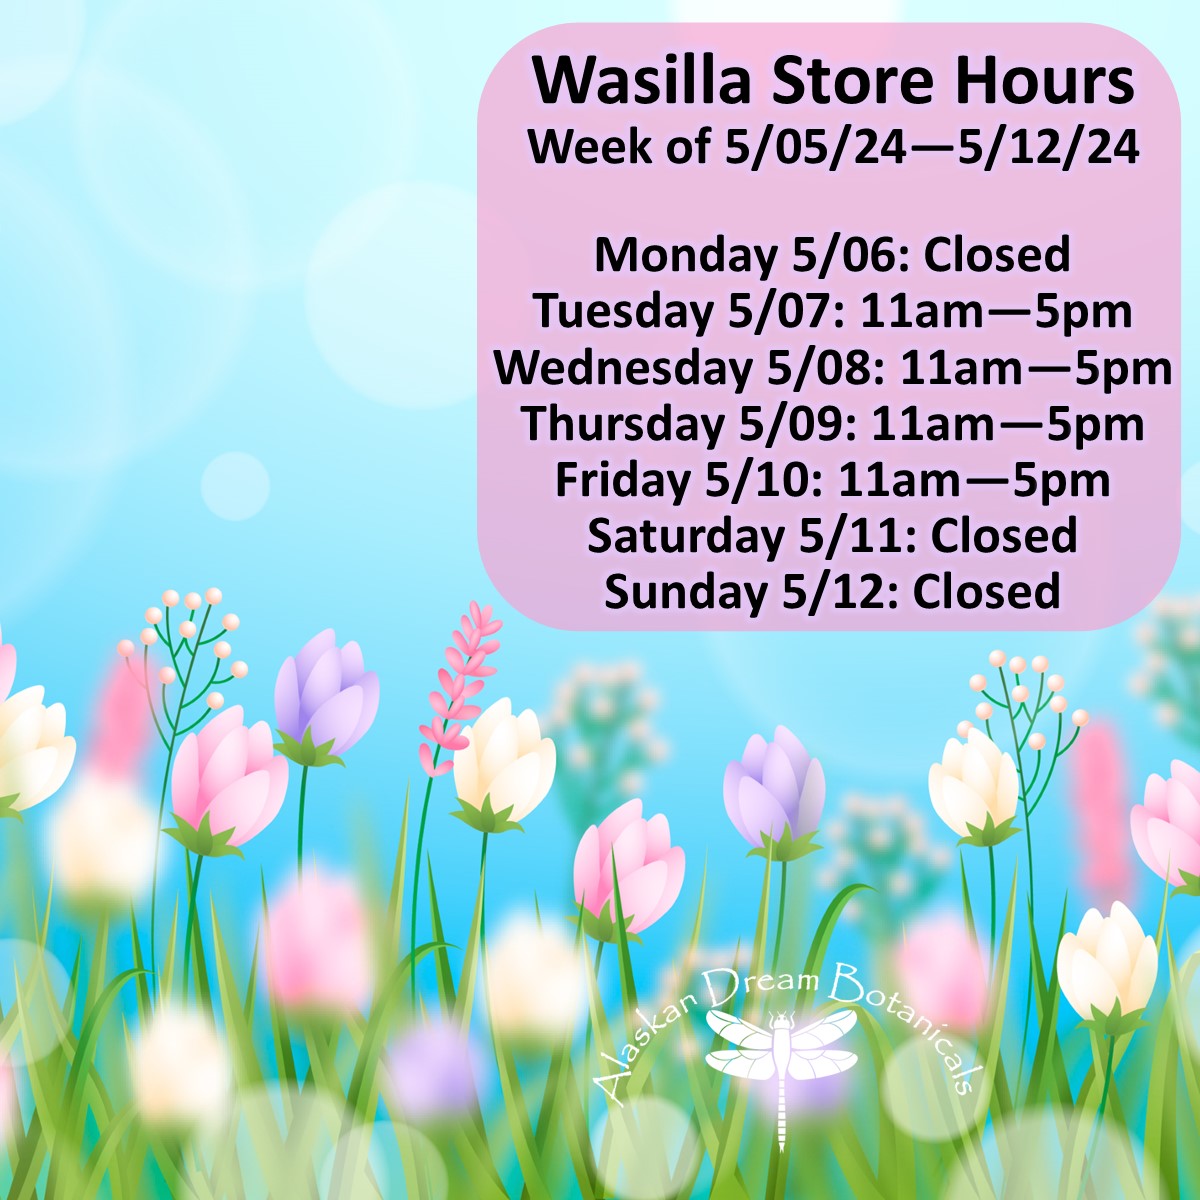 Wasilla Store Hours